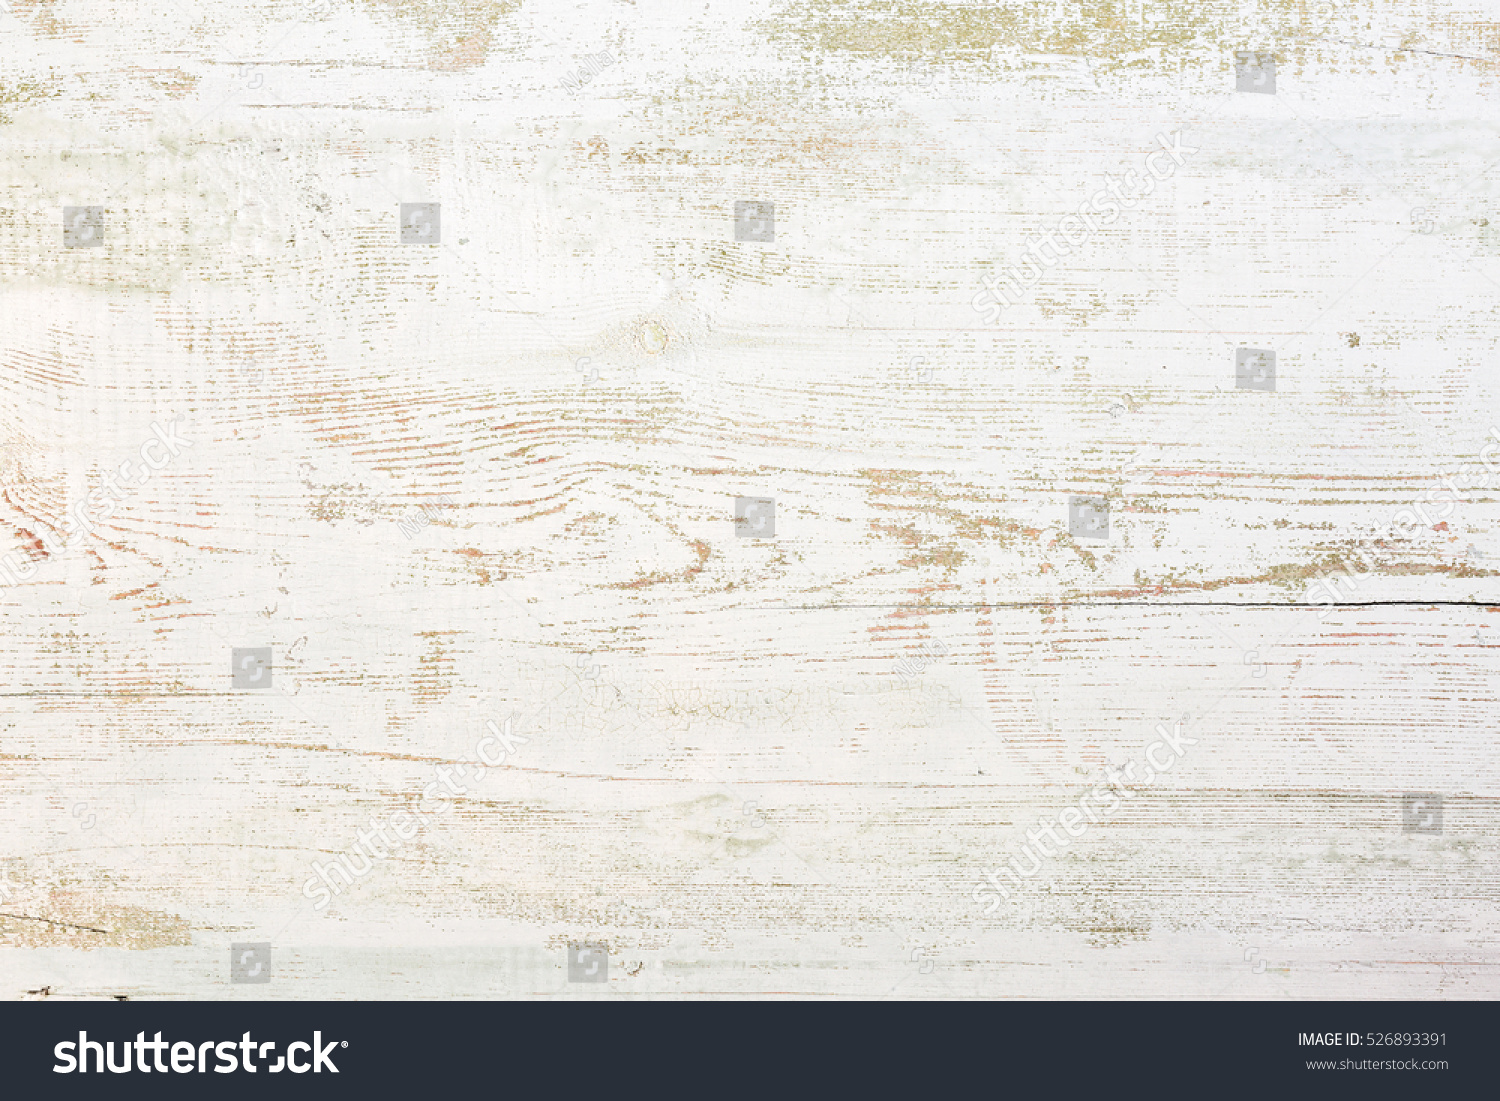 Grunge background. Peeling paint on an old wooden floor. #526893391